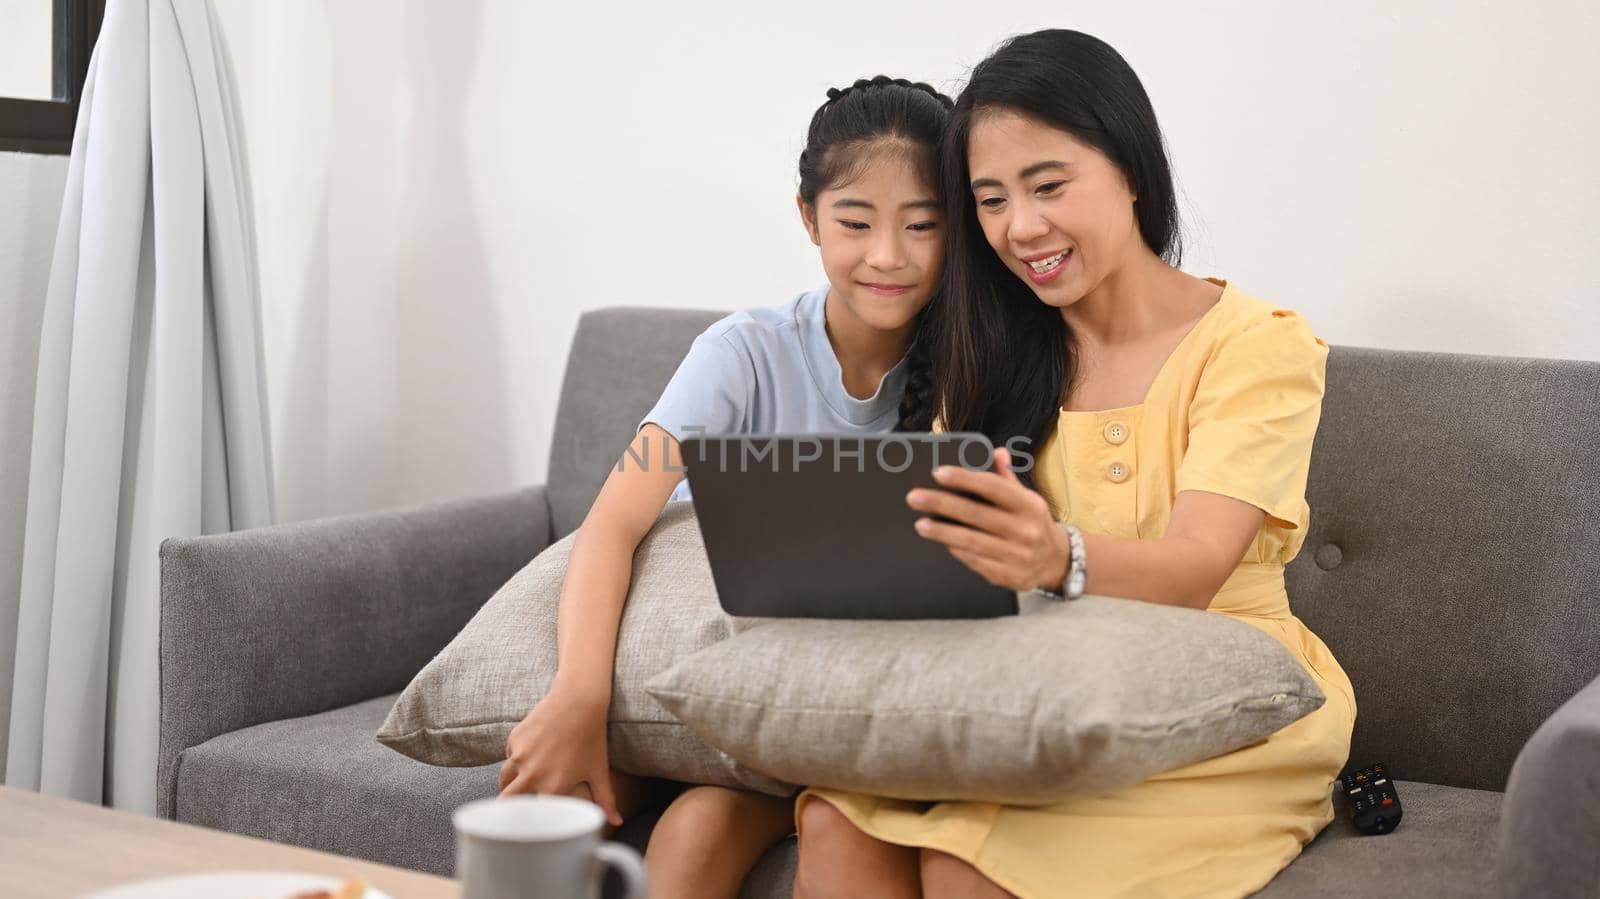 Smiling asian mom and daughter having fun browsing internet on digital tablet, enjoying spending free time together.